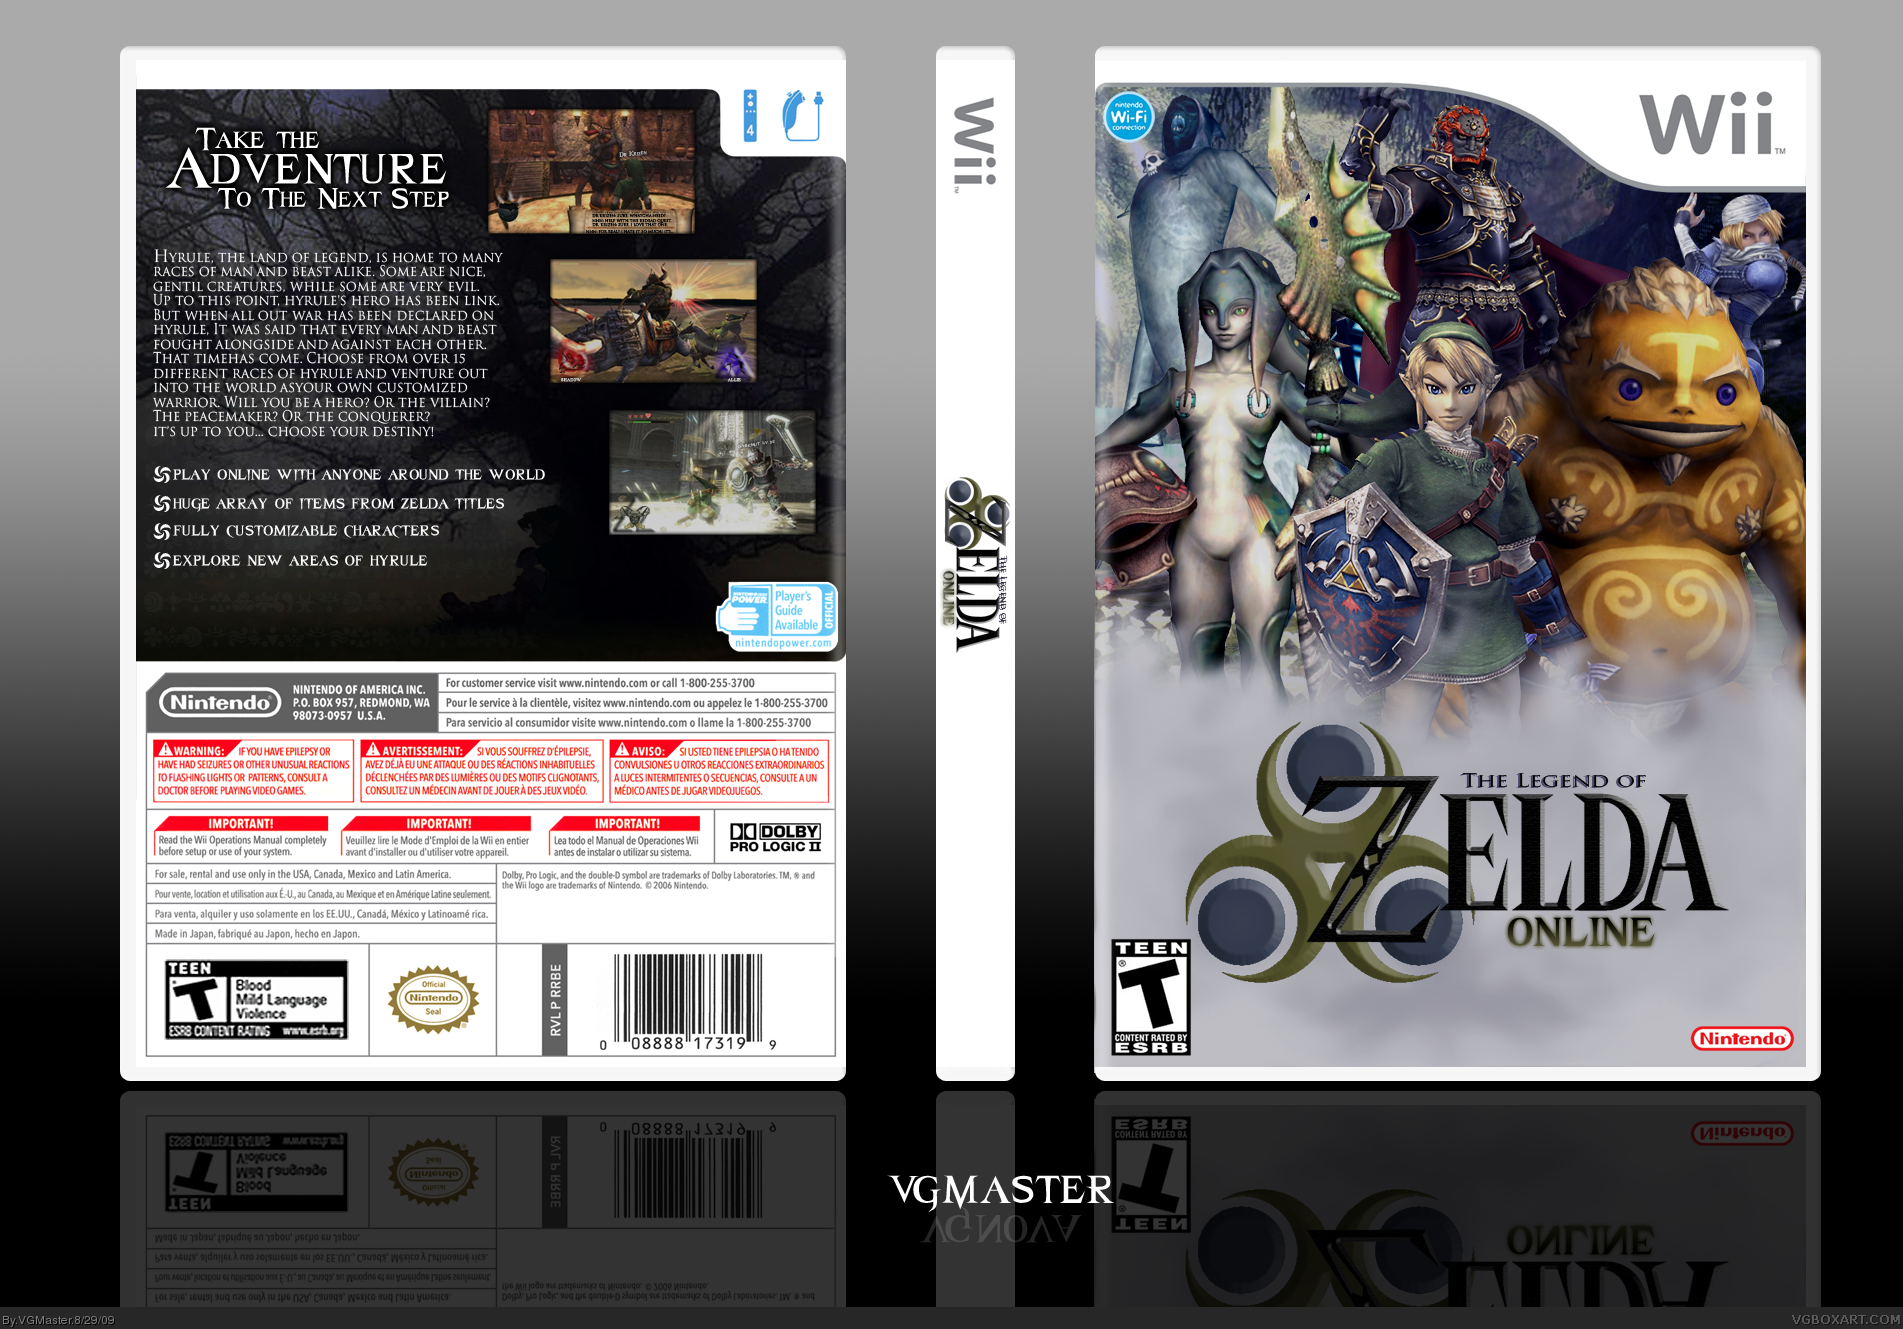 The Legend of Zelda: Online box cover